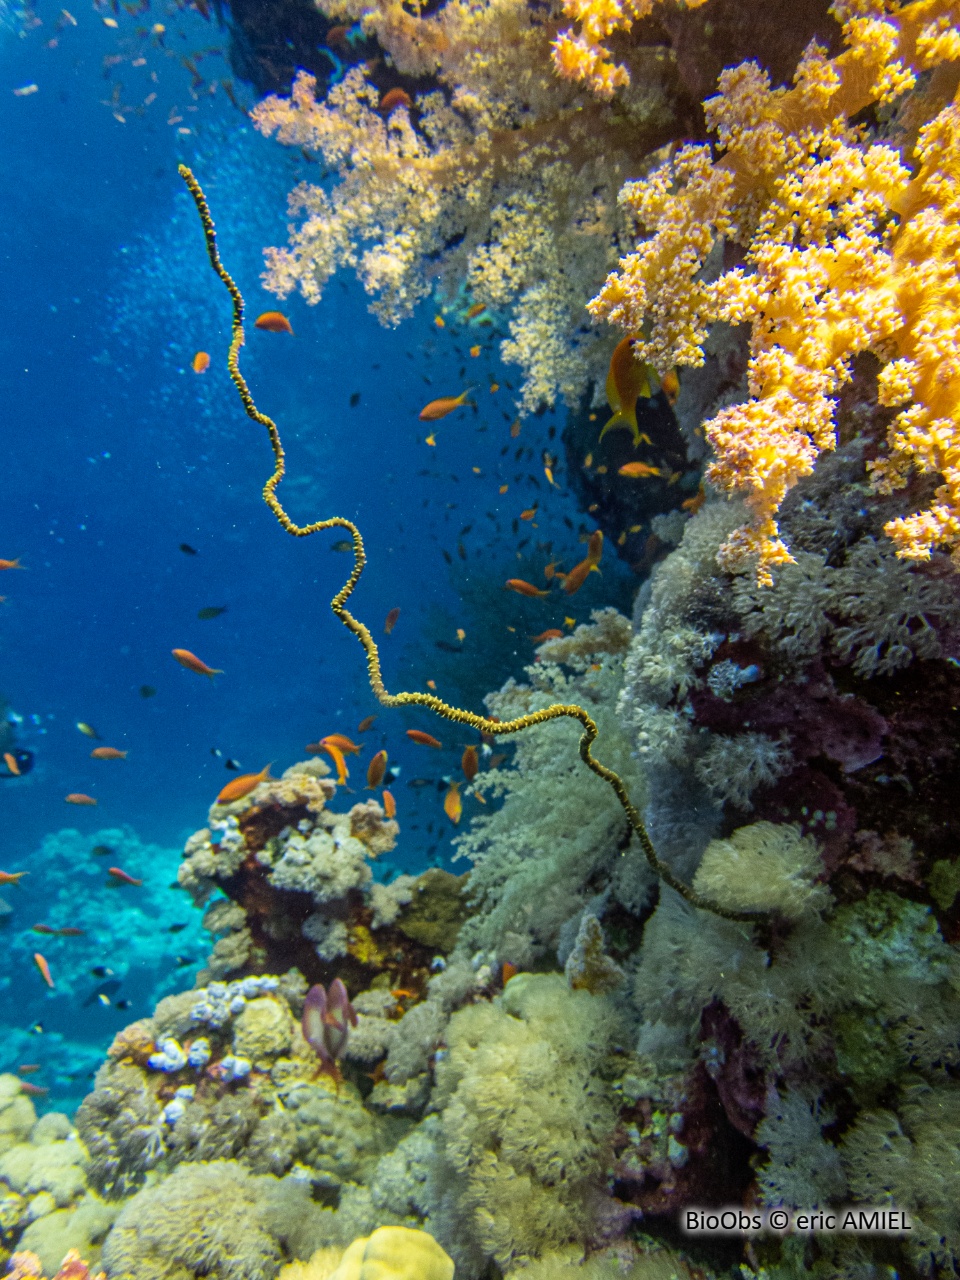 Corail fil-de-fer tordu - Cirrhipathes anguina - eric AMIEL - BioObs